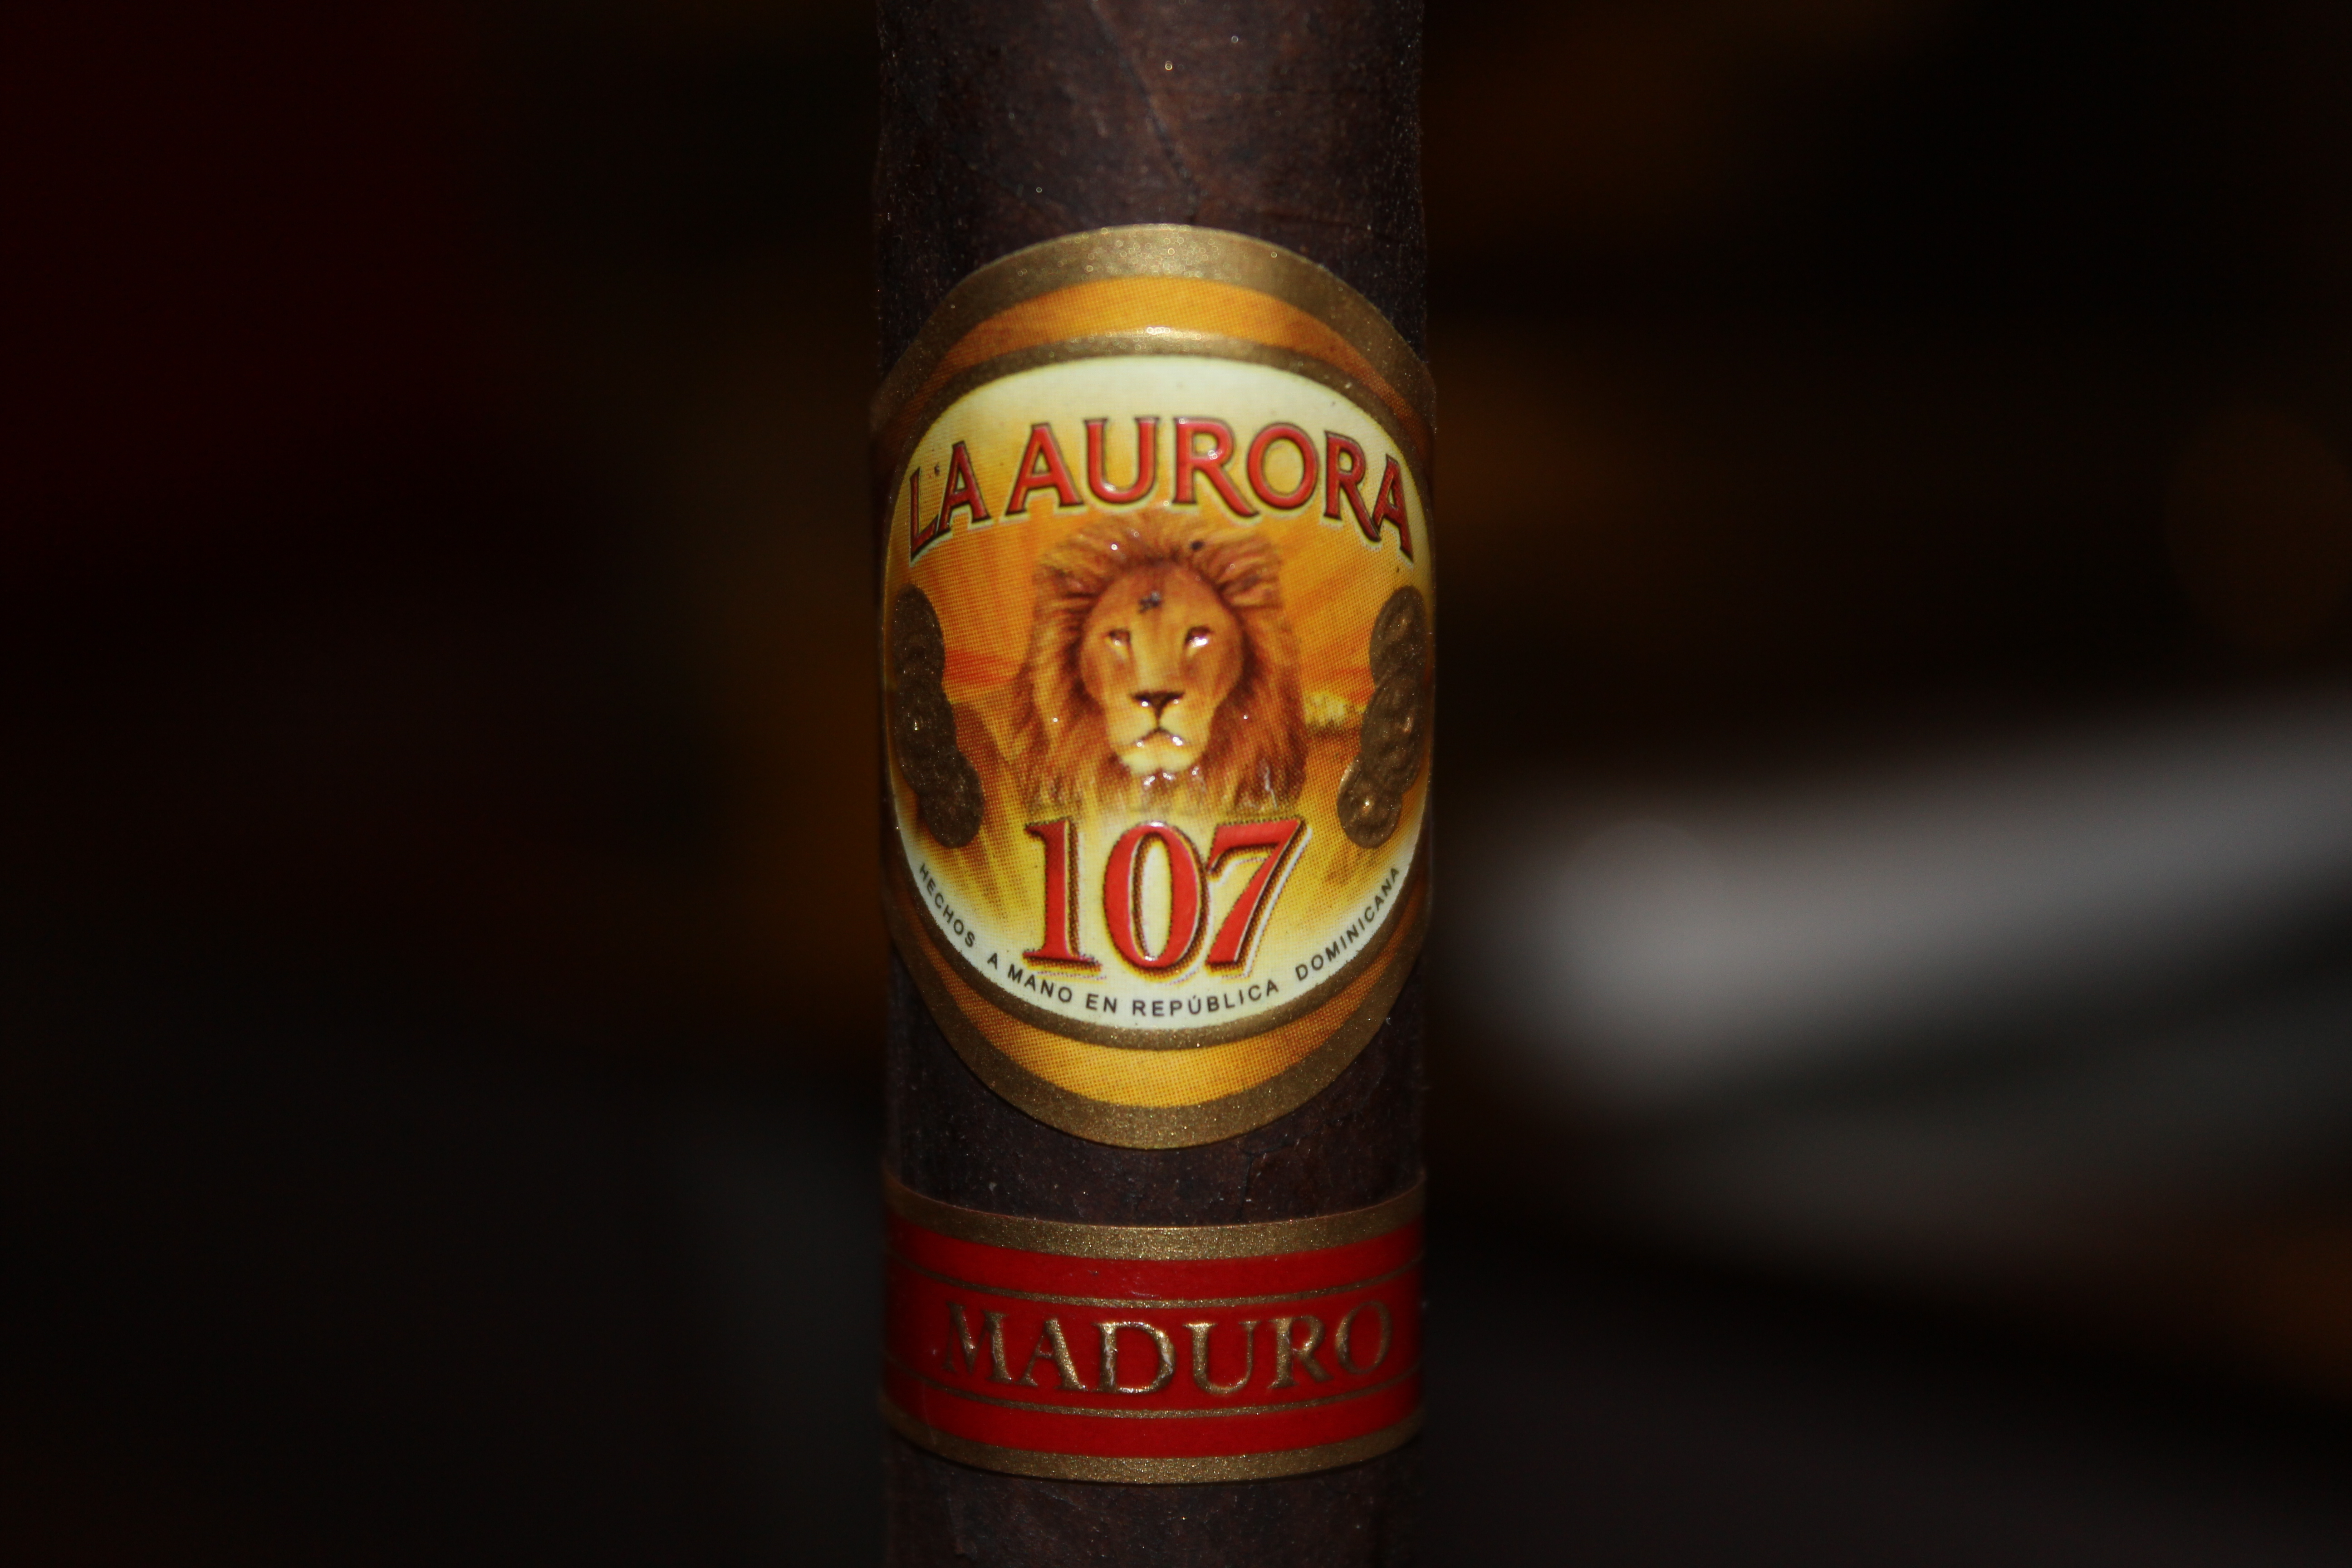 La Aurora 107 Maduro Robusto – Cigar Review